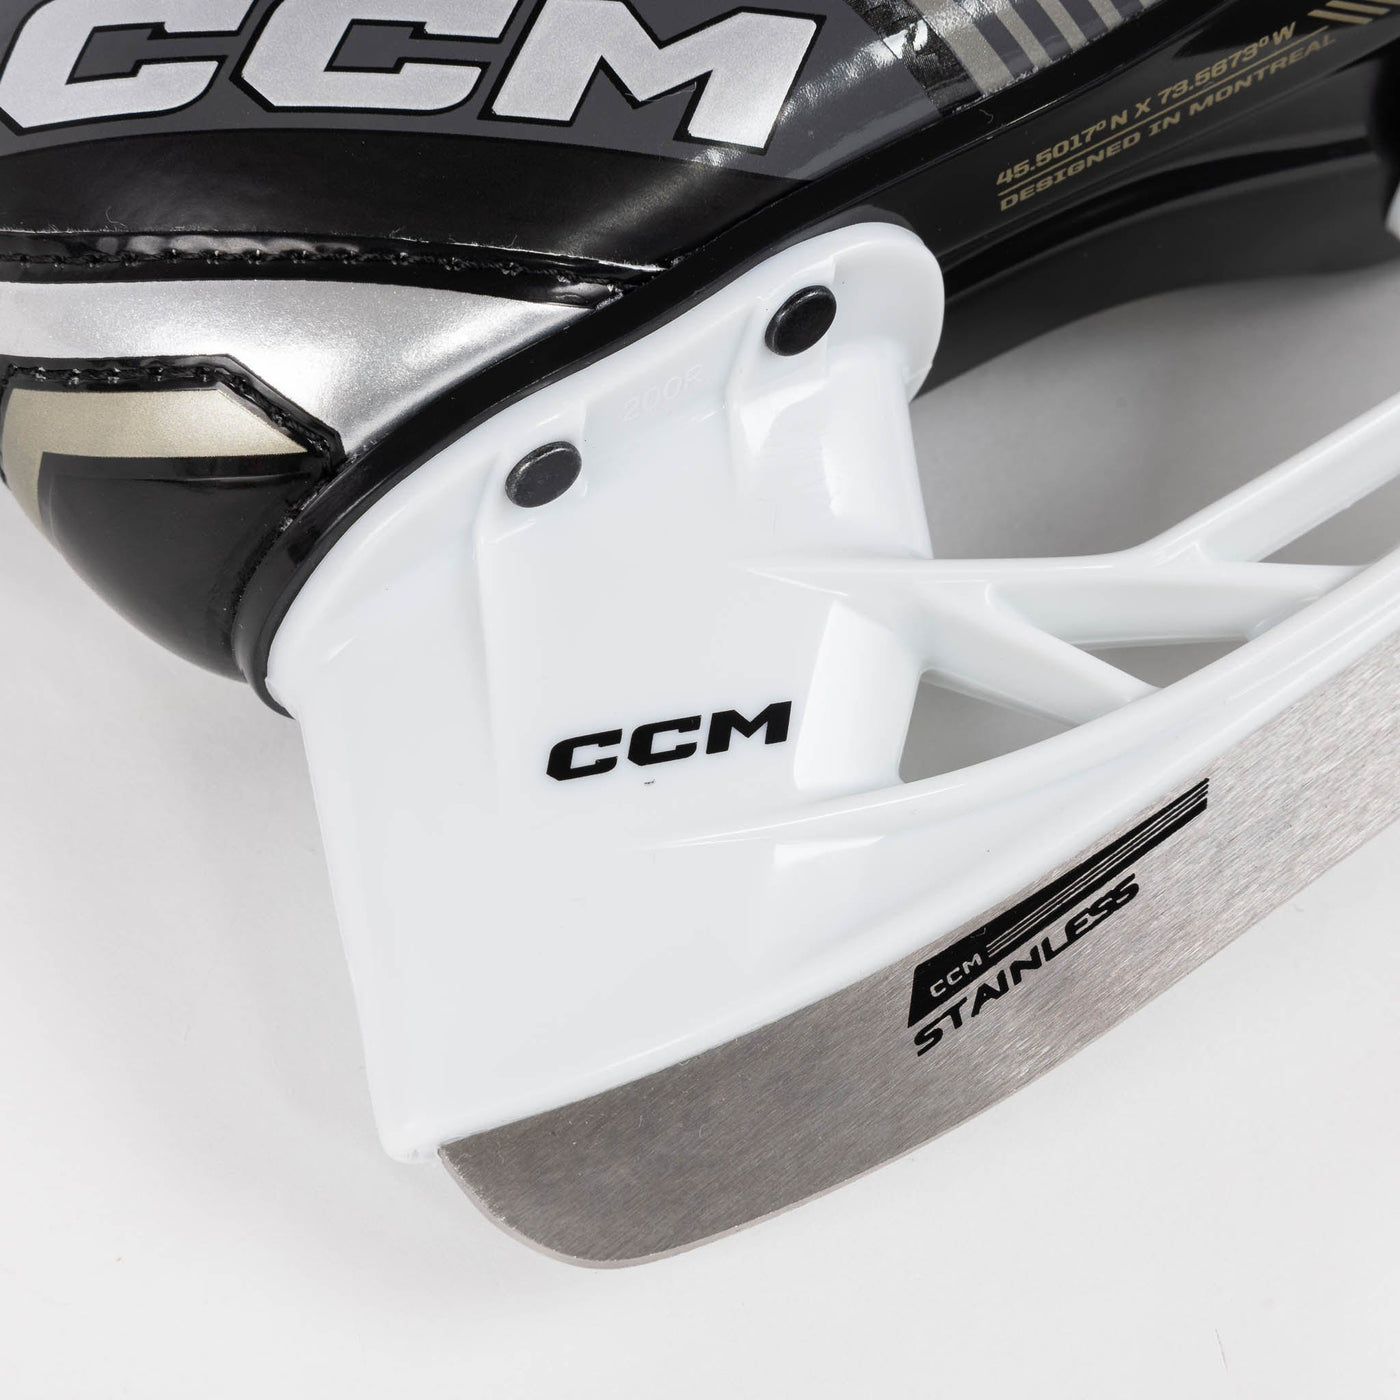 CCM Tacks AS-V Youth Hockey Skates - The Hockey Shop Source For Sports